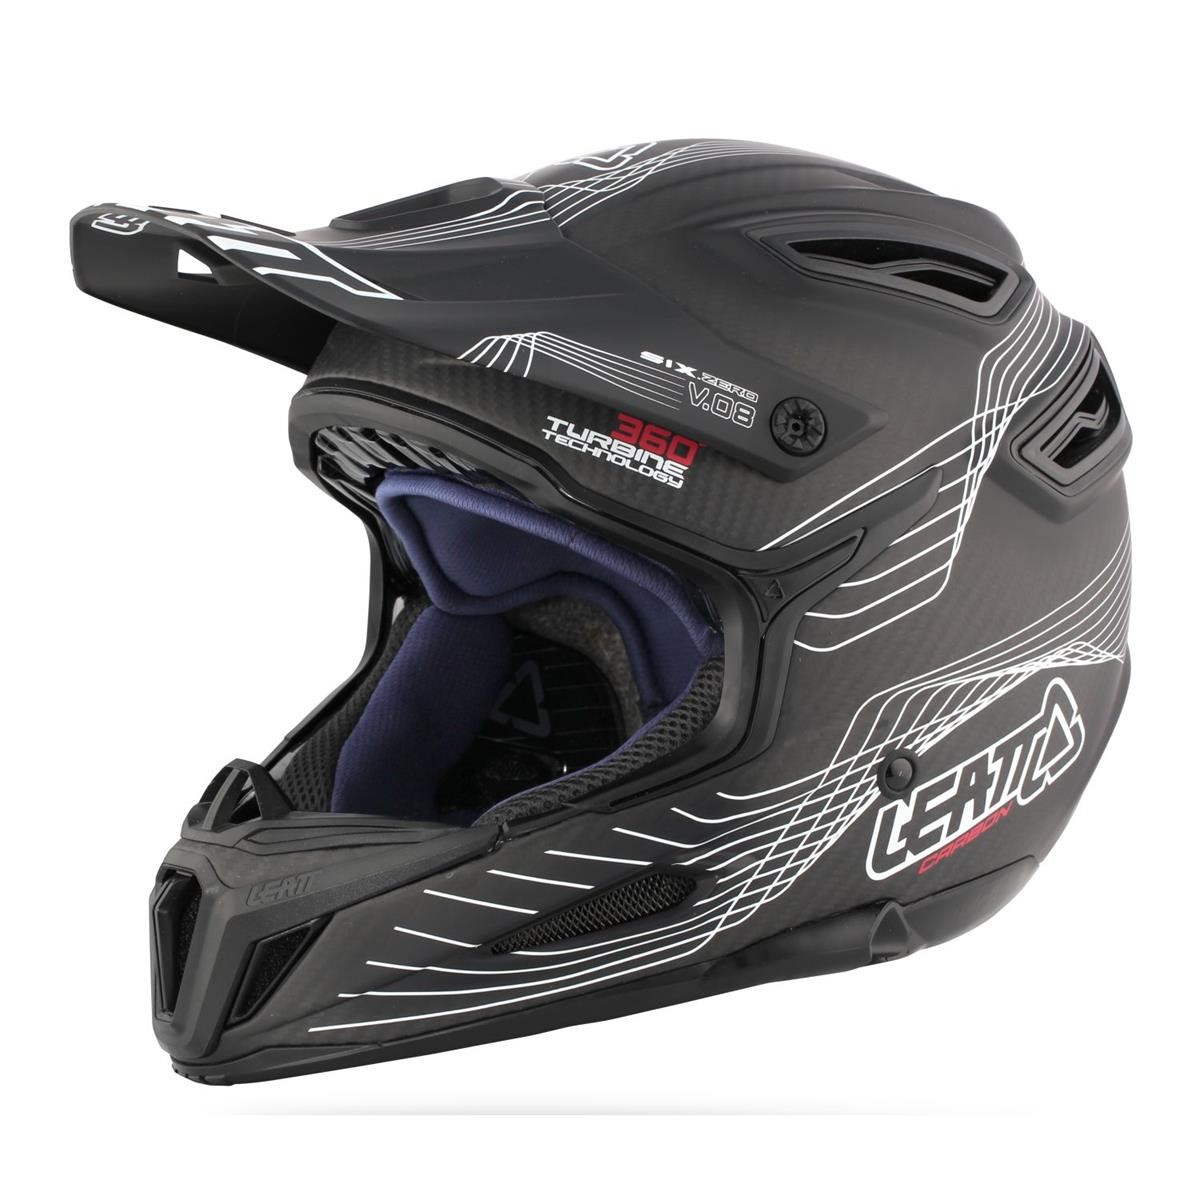 Leatt Downhill-MTB Helmet DBX 6.0 Carbon Carbon/White/Red